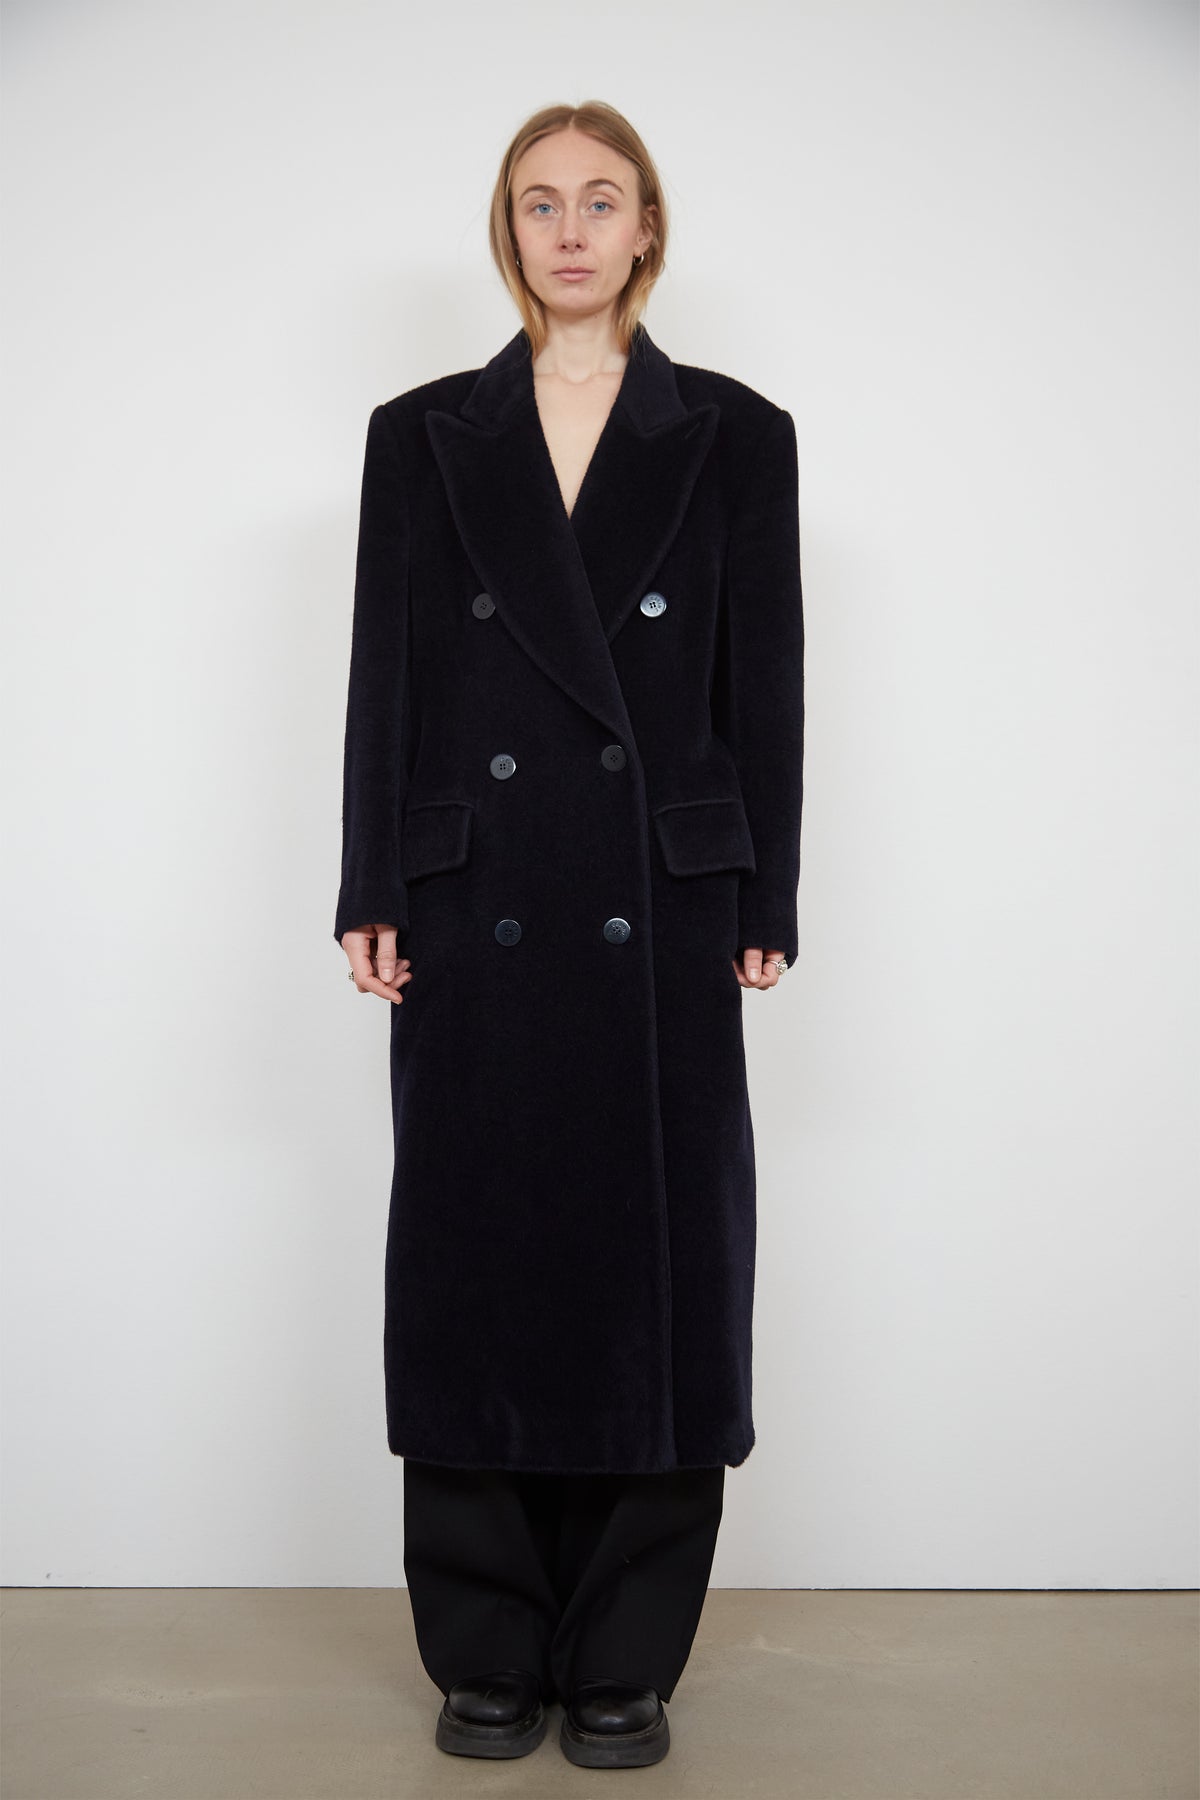 Celine coat